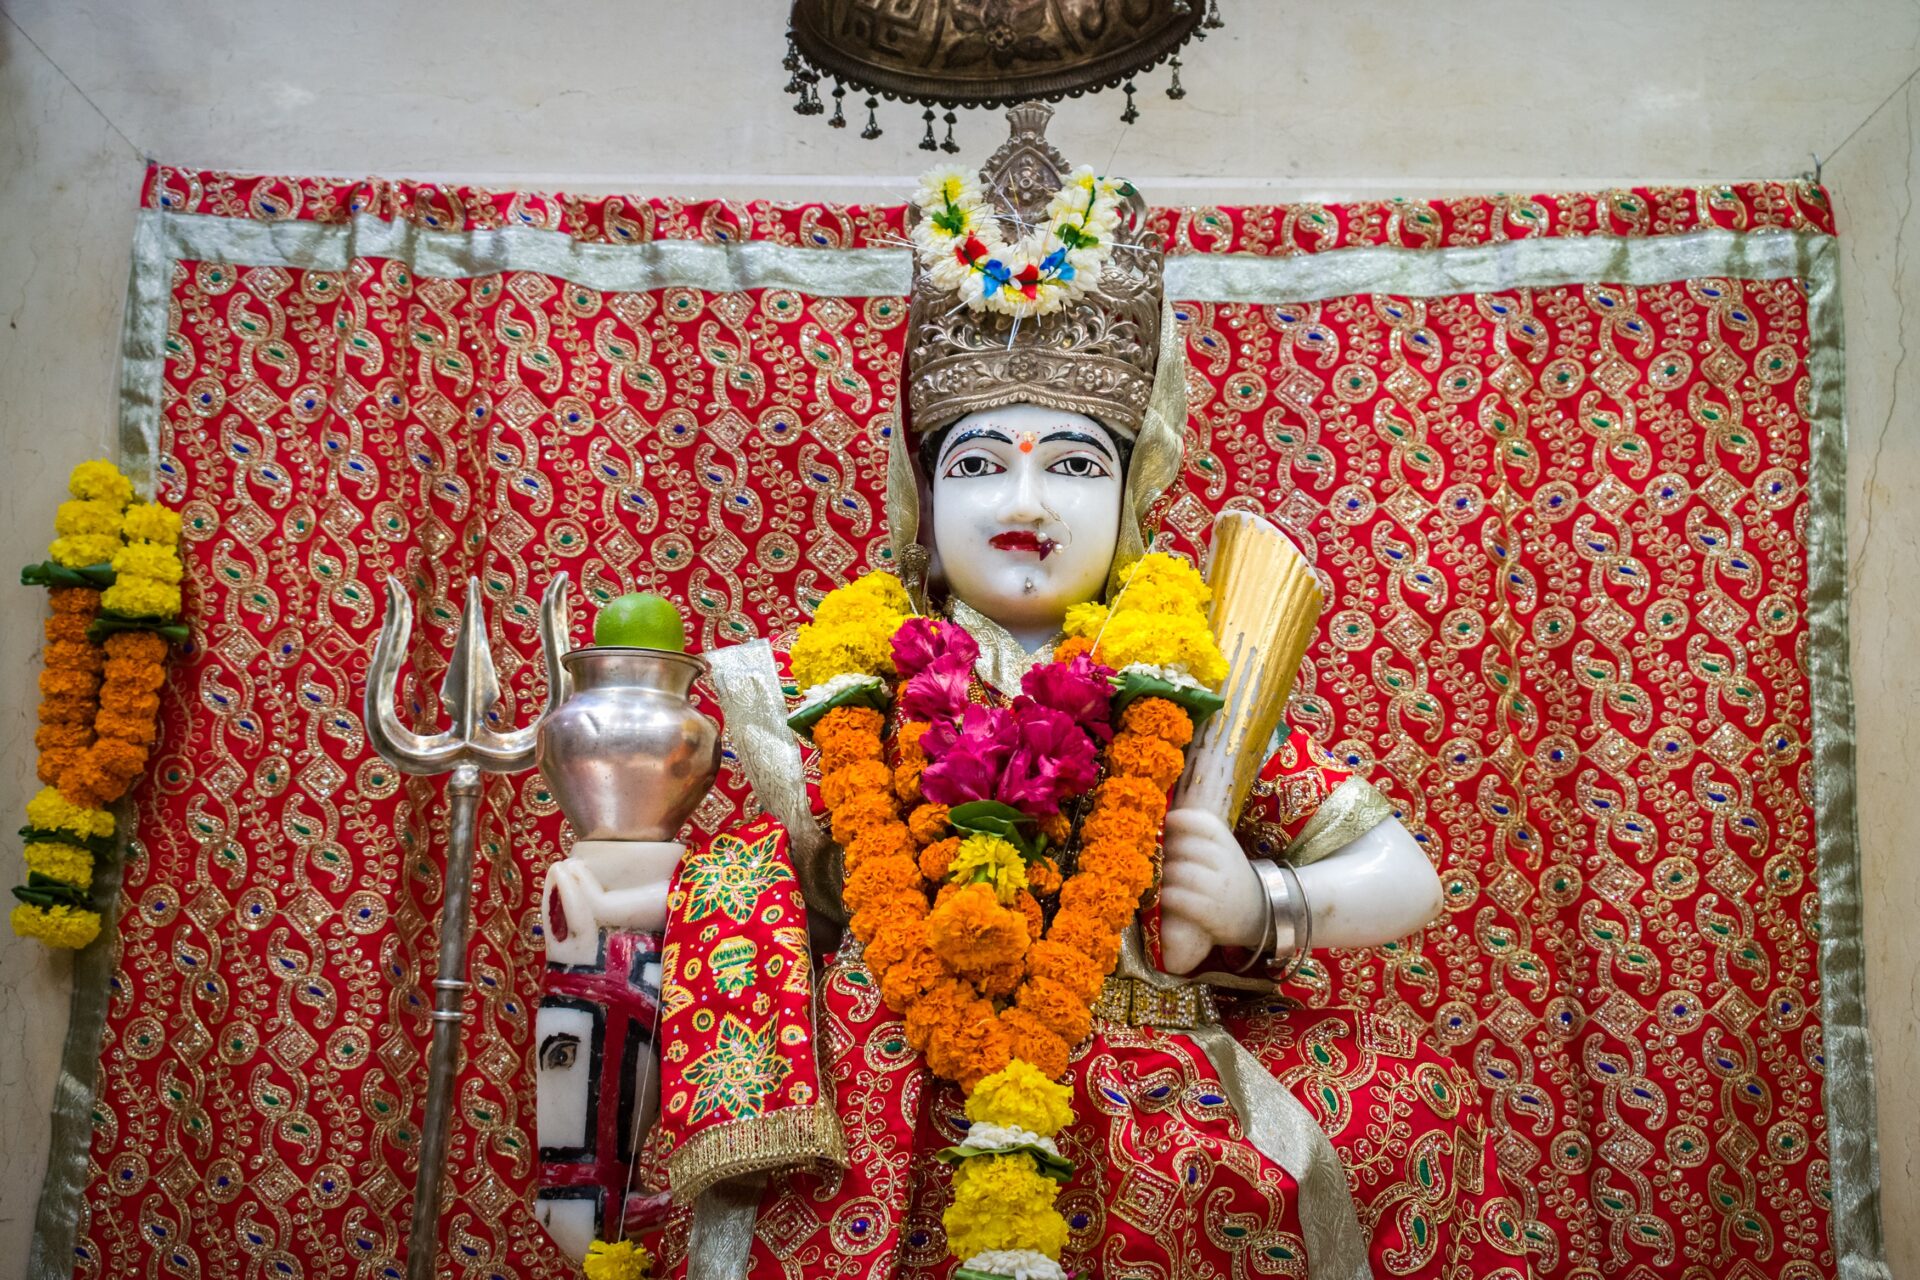 Who Is The Hindu God Associated With Ramayana?